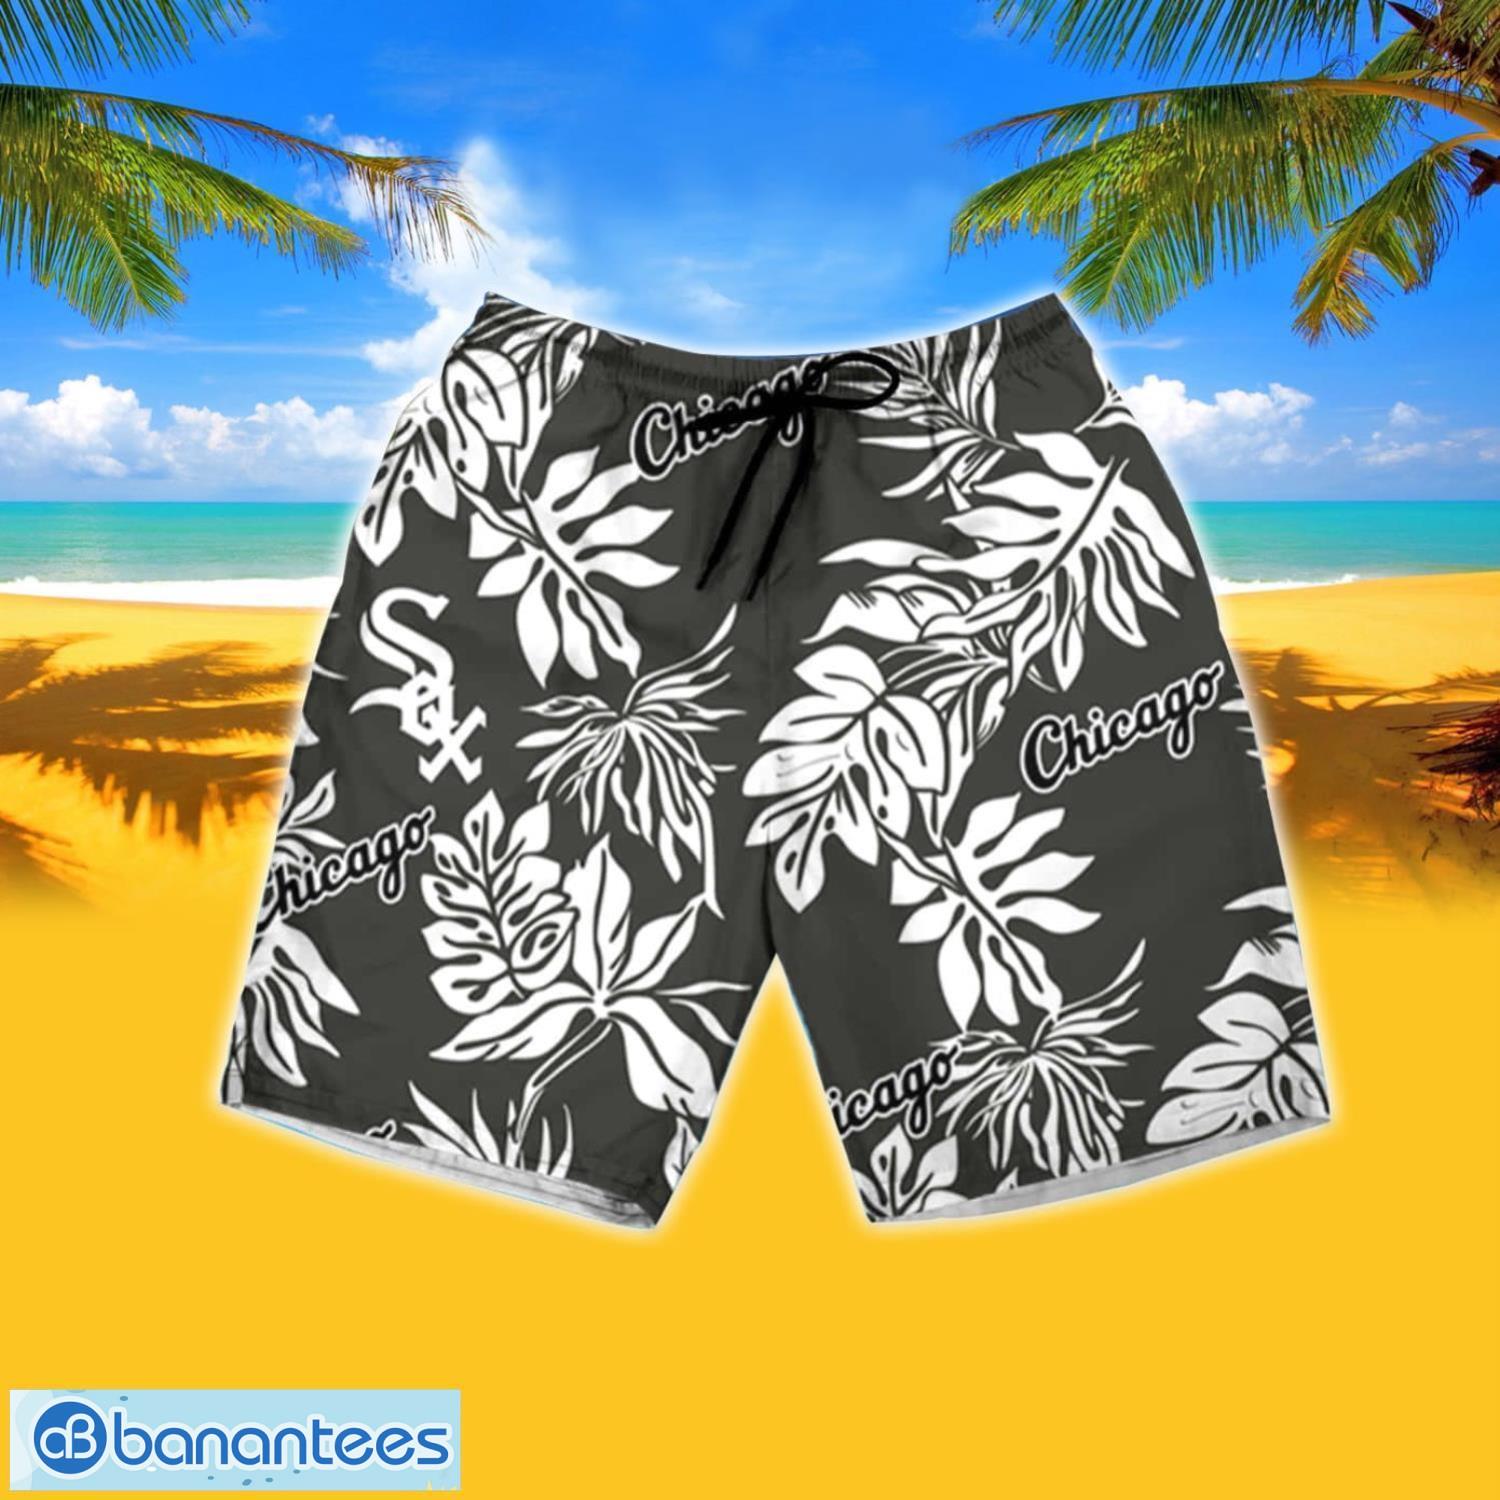 White Sox Chicago Hawaiian Shirt Beach Shorts